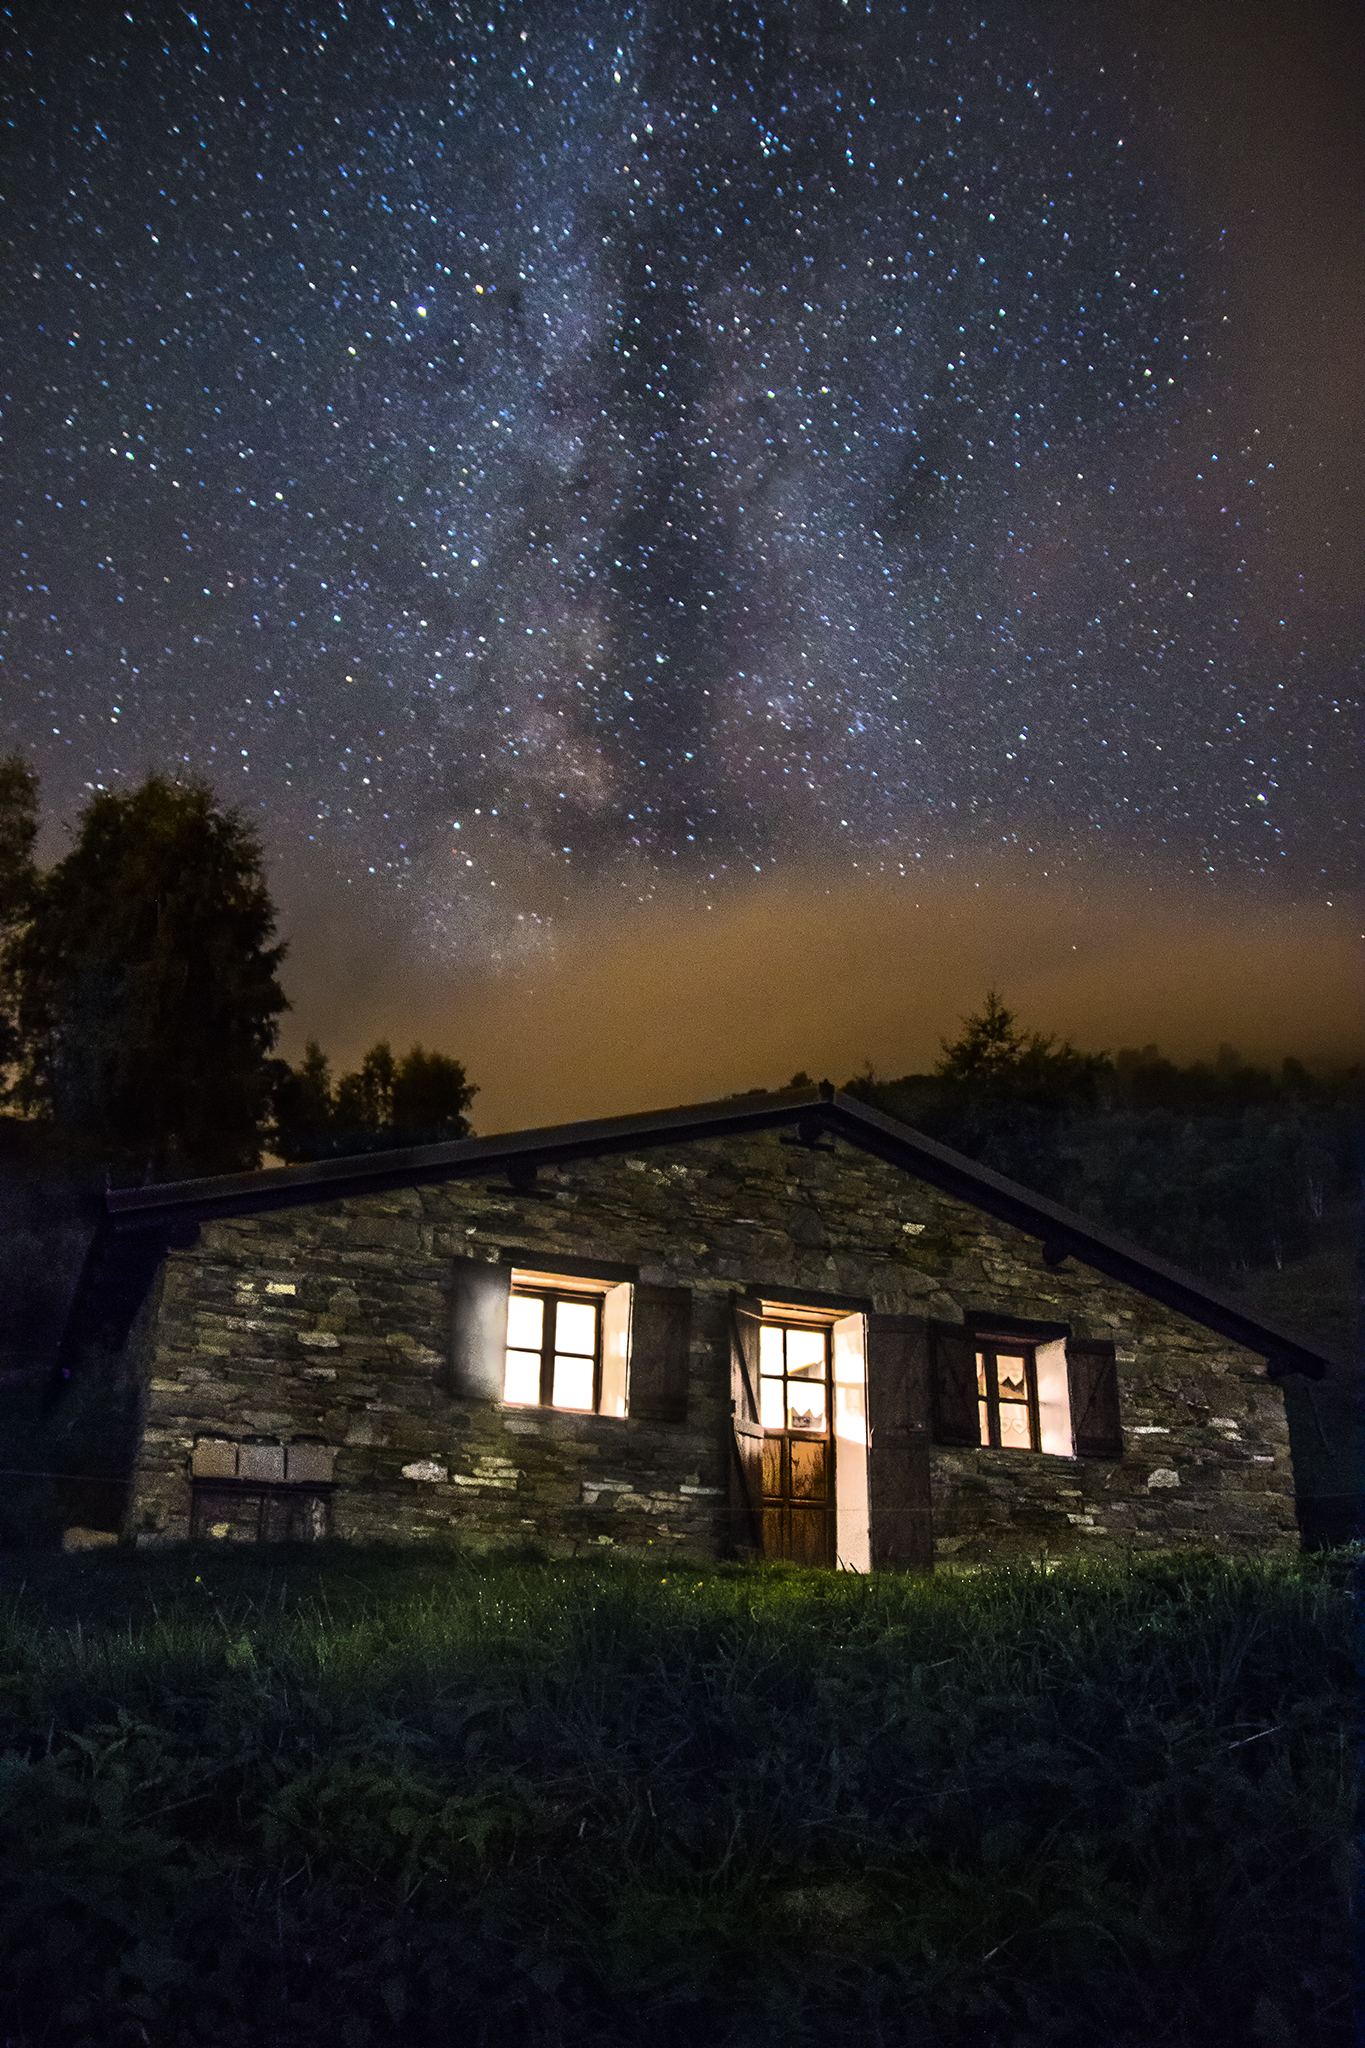 Hut under the starry sky...